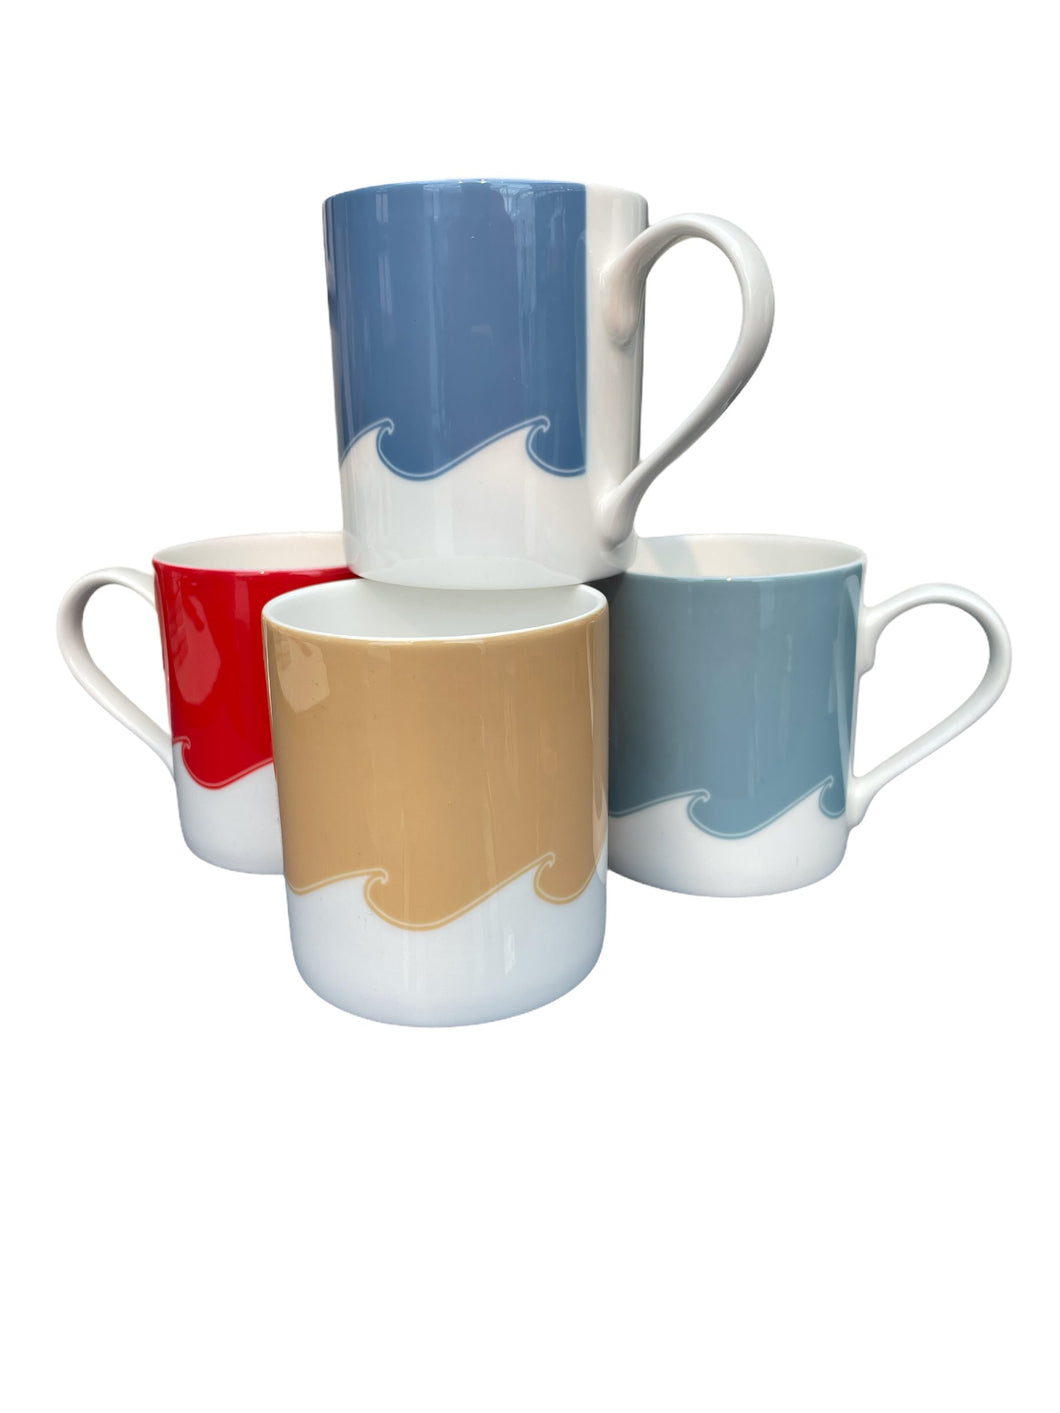 Wholesale Waves Mug Set (Four 250ml Mugs) - Mustard and Gray Trade Homeware and Gifts - Made in Britain